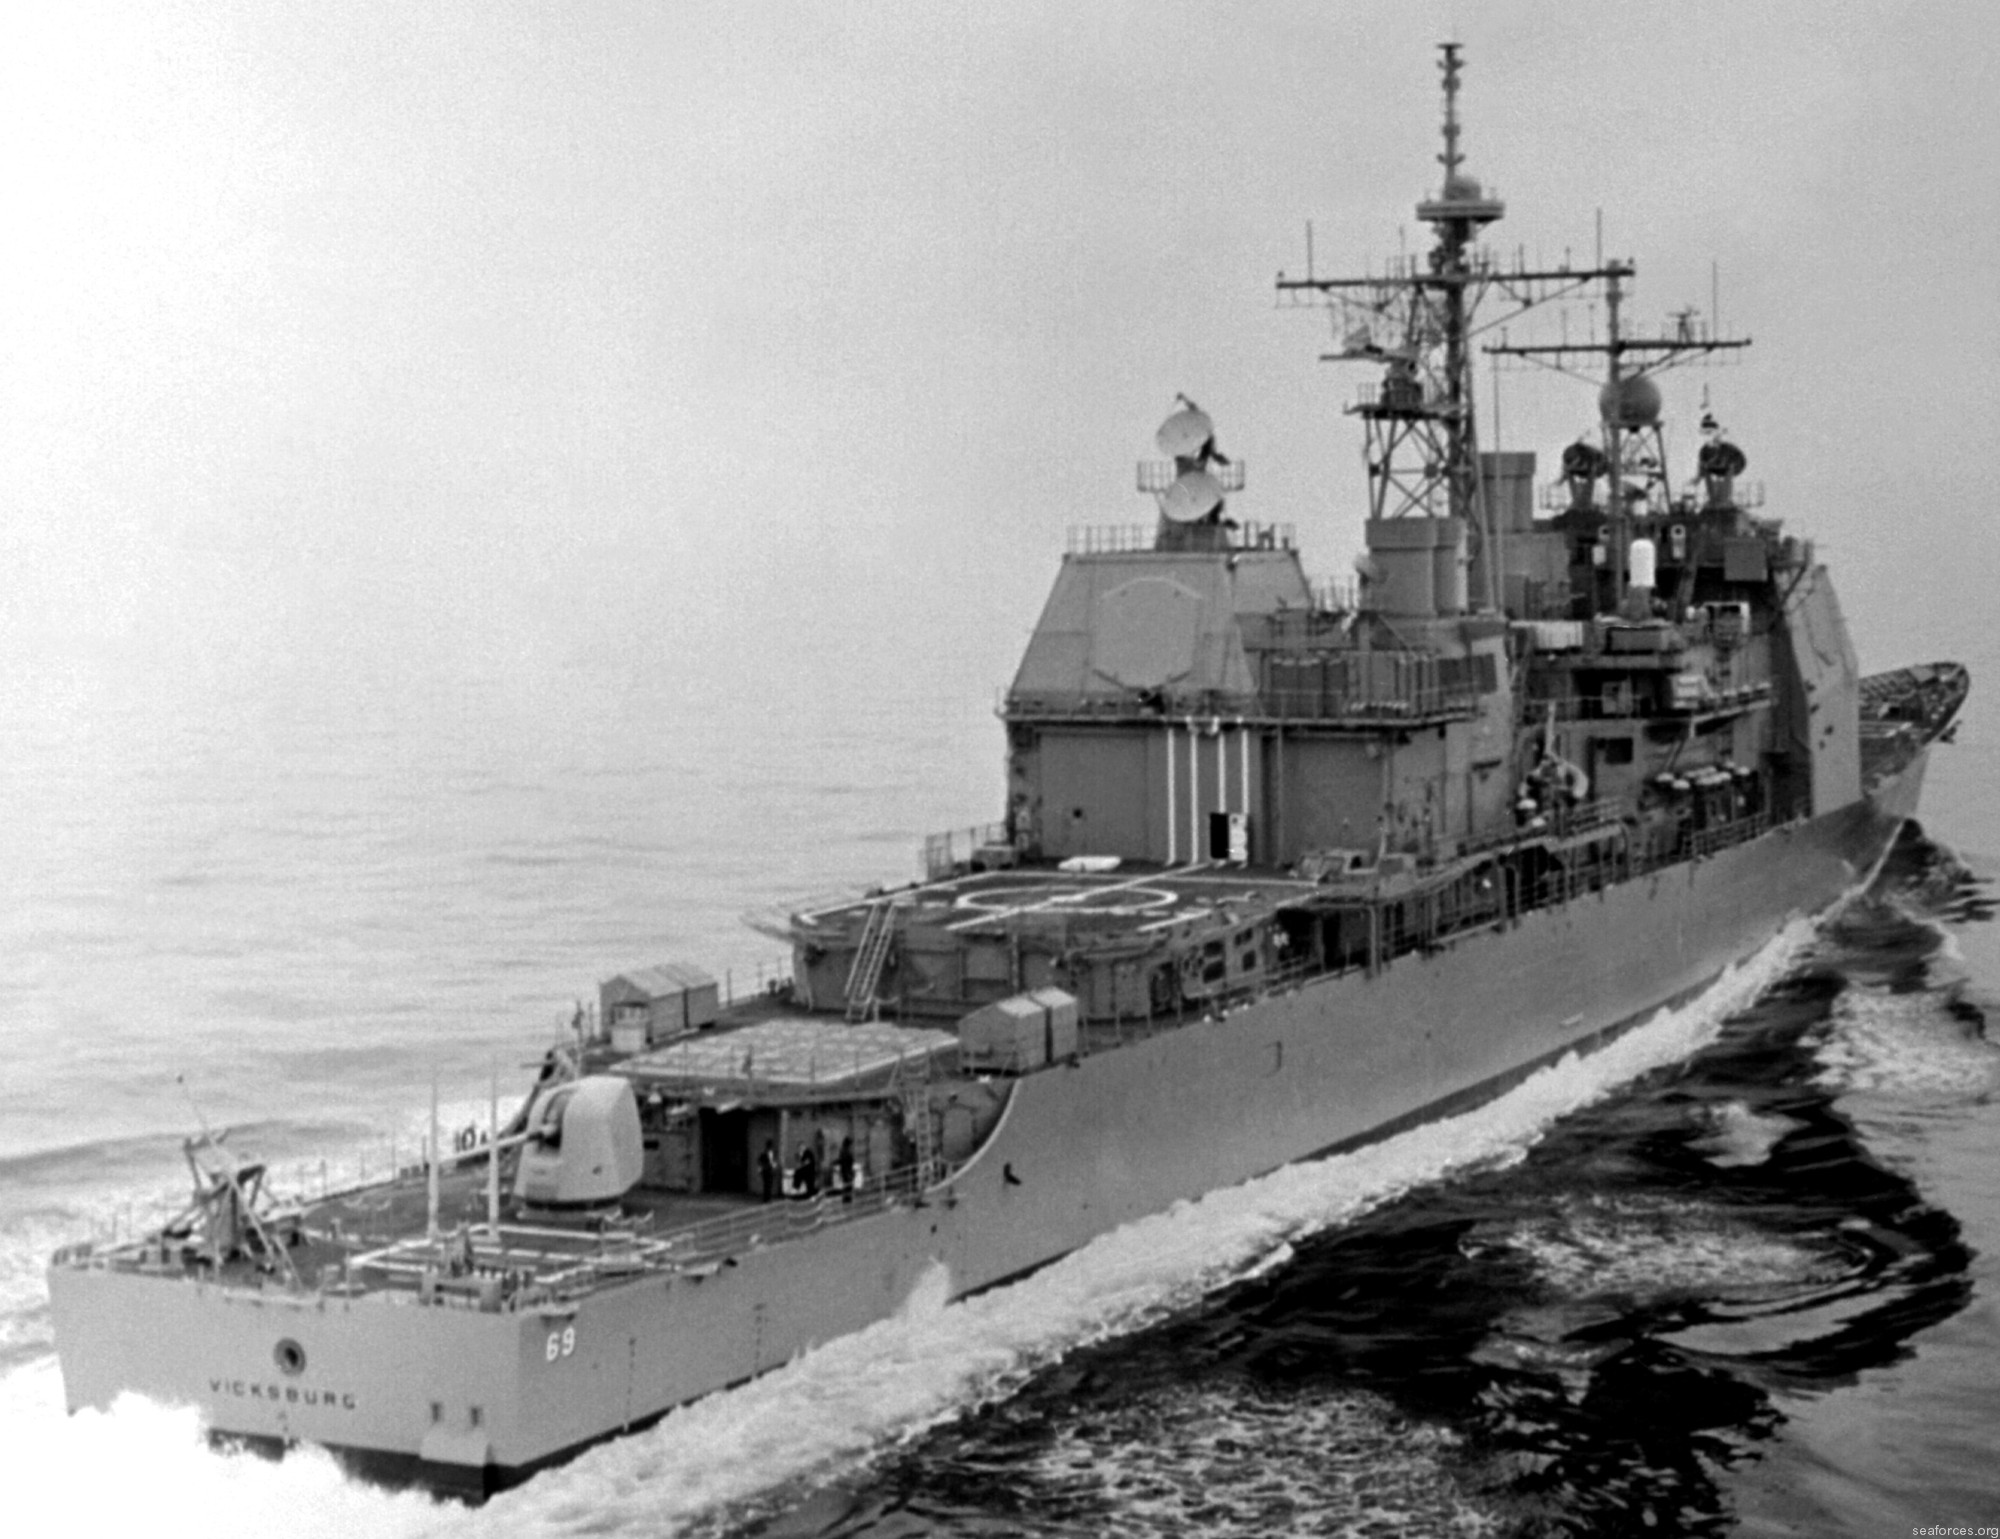 cg-69 uss vicksburg ticonderoga class guided missile cruiser us navy 53